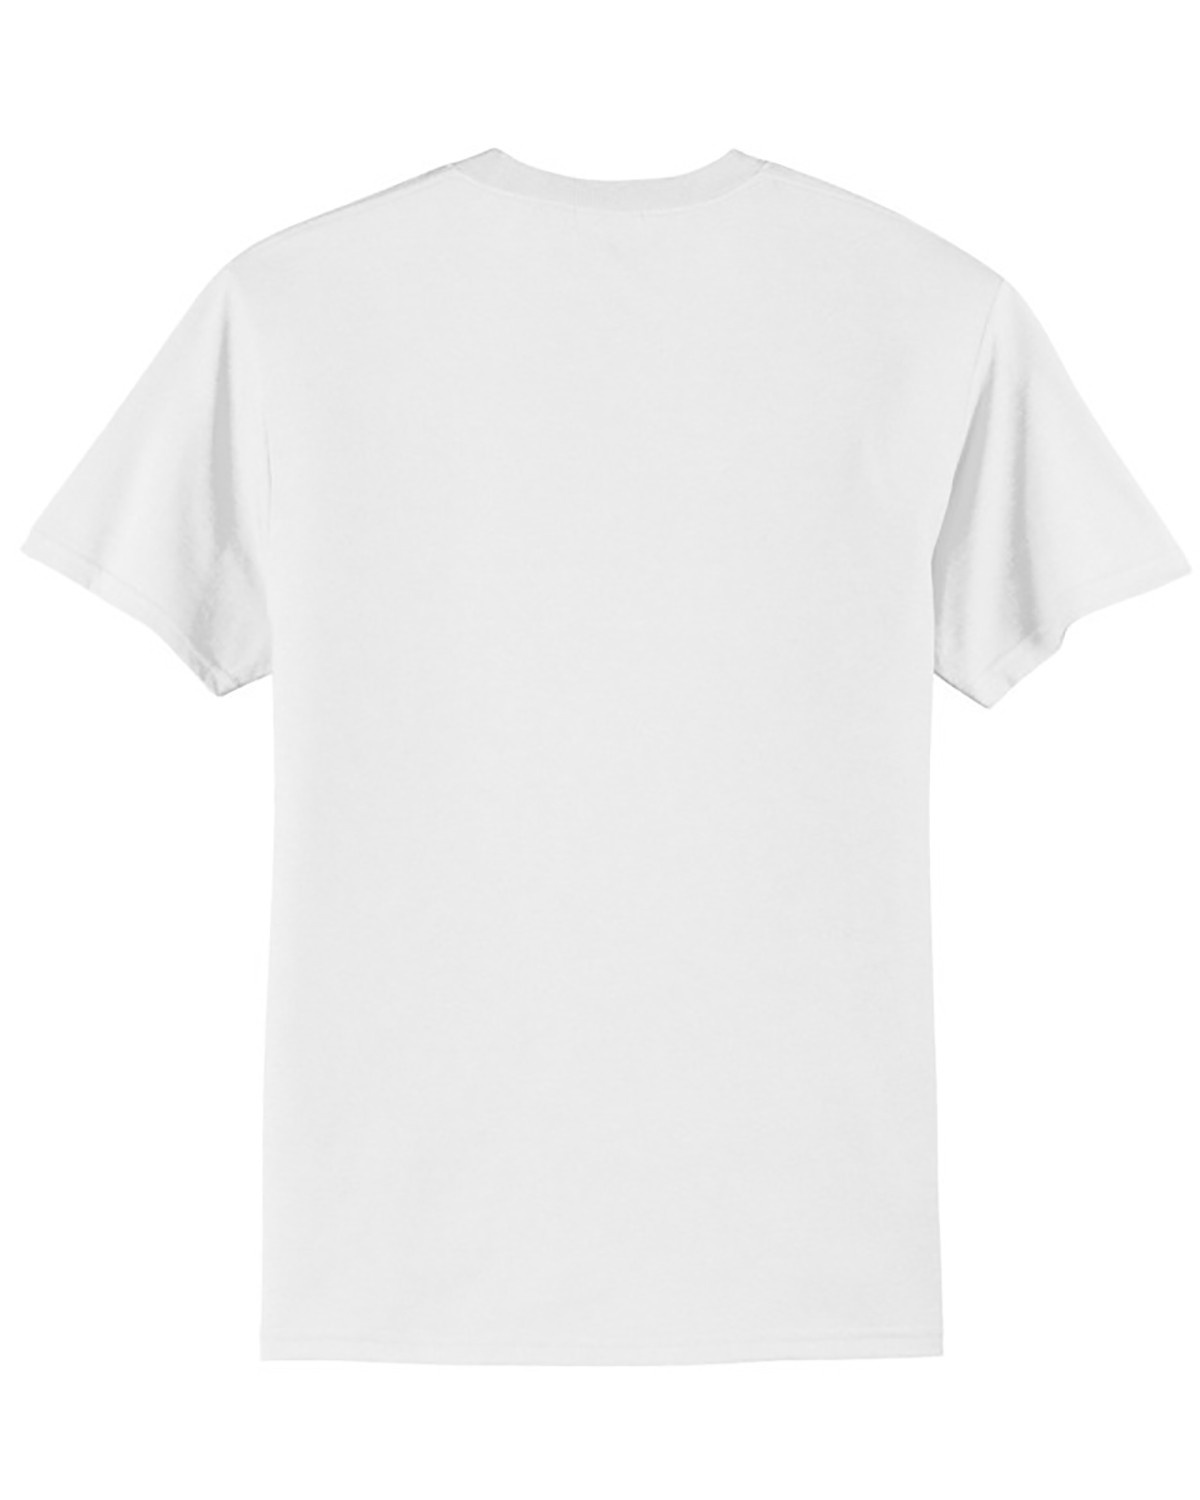 Most Popular Port Company PC55T Men's Cotton/Poly T-Shirt